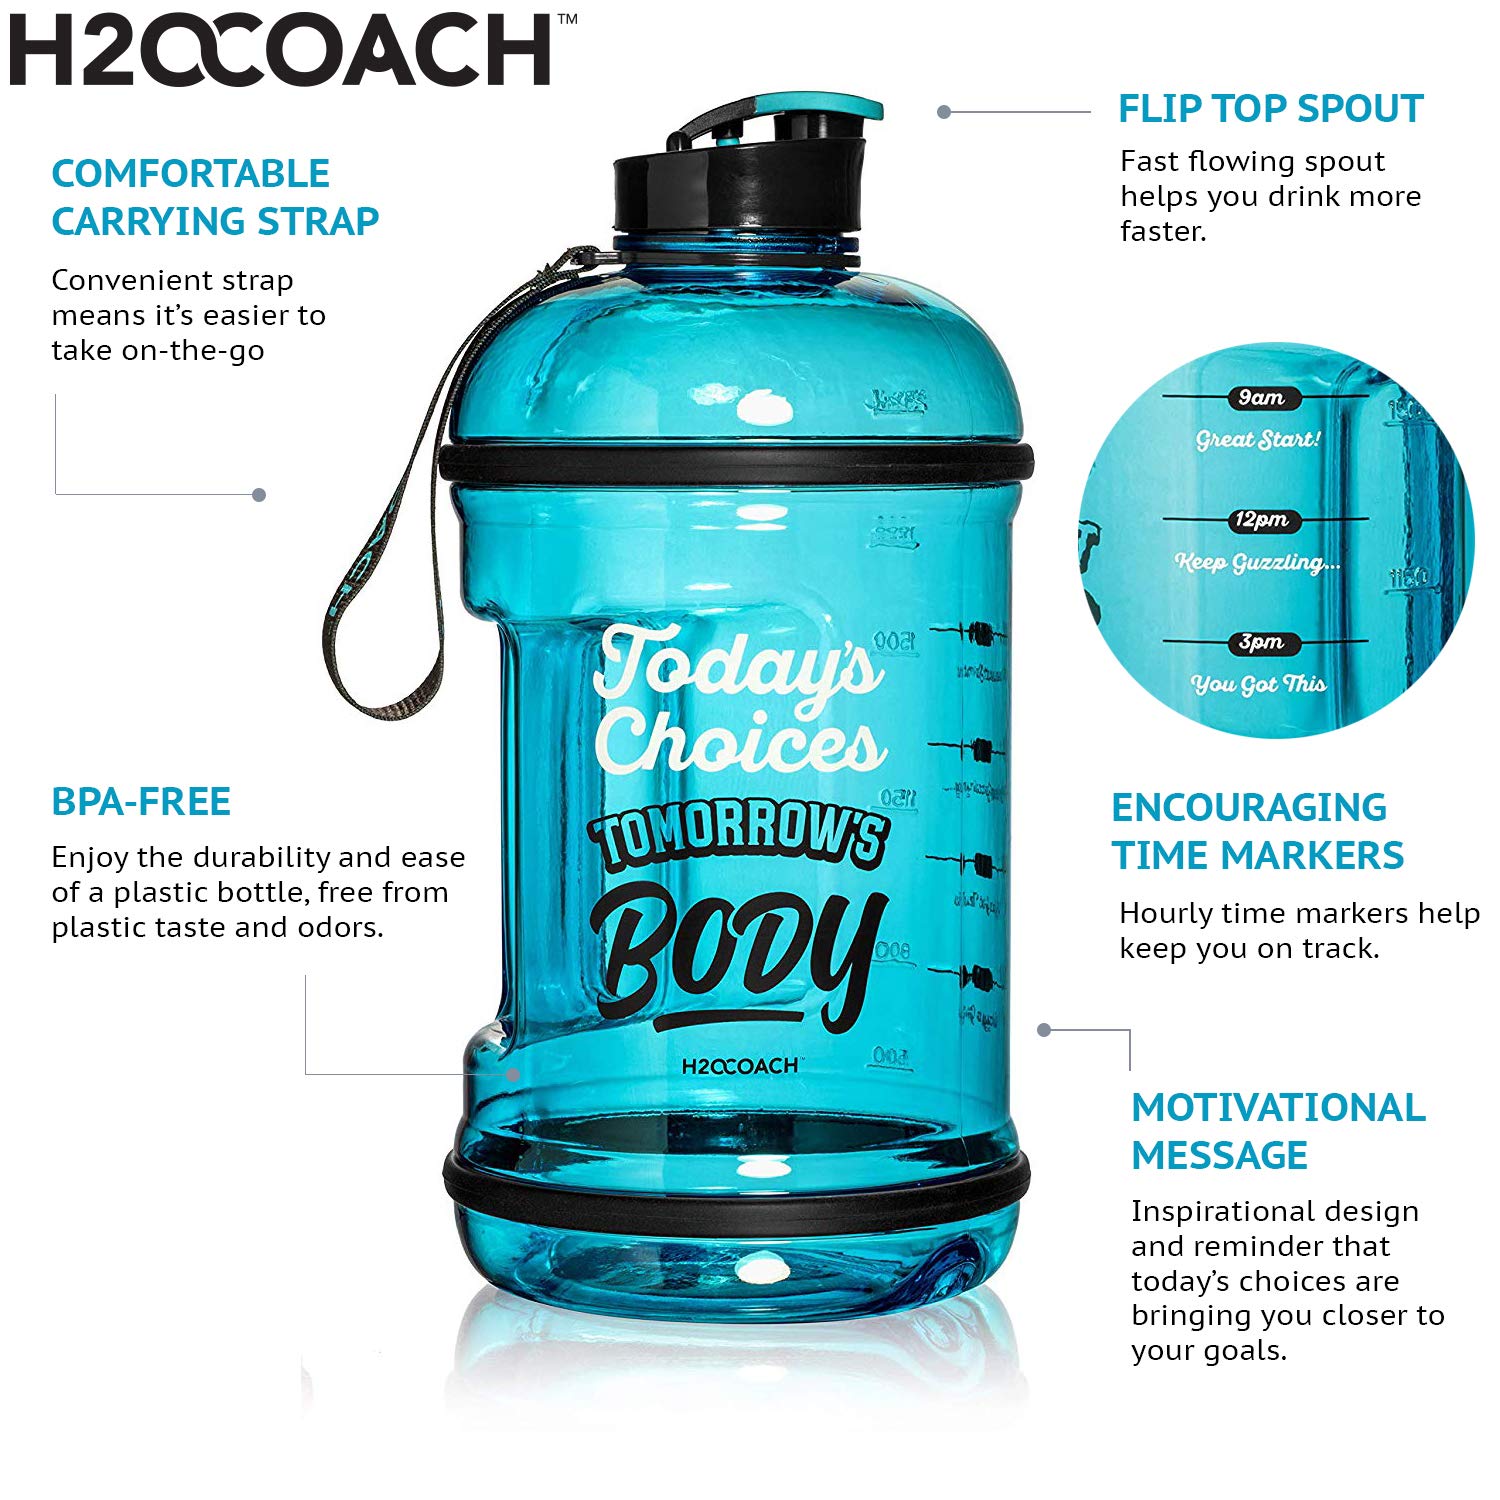 Homezo™ Bus Water Bottle